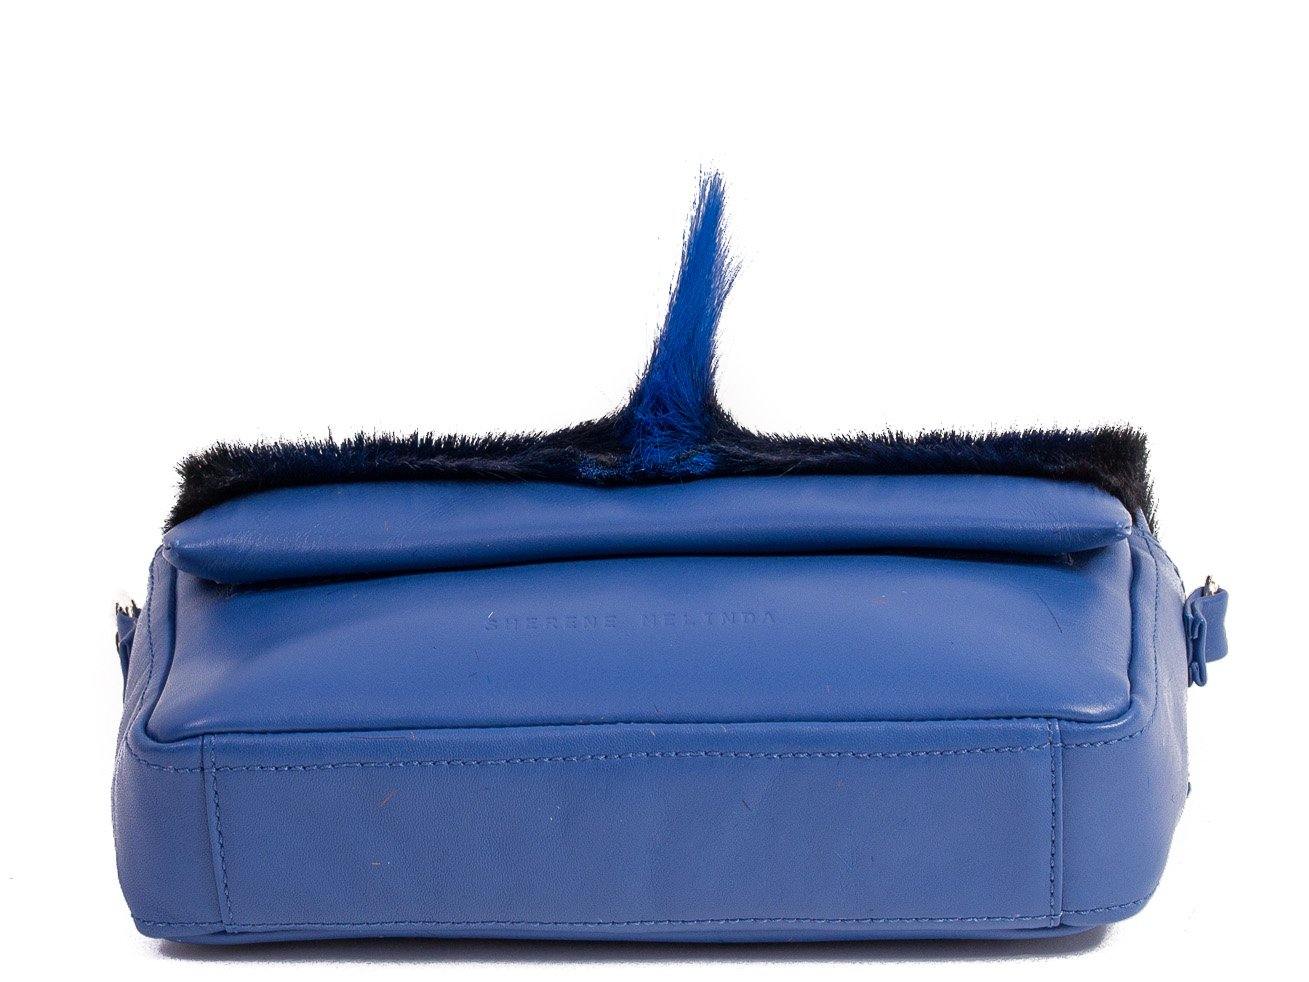 sherene melinda springbok hair-on-hide royal blue leather shoulder bag Fan bottom